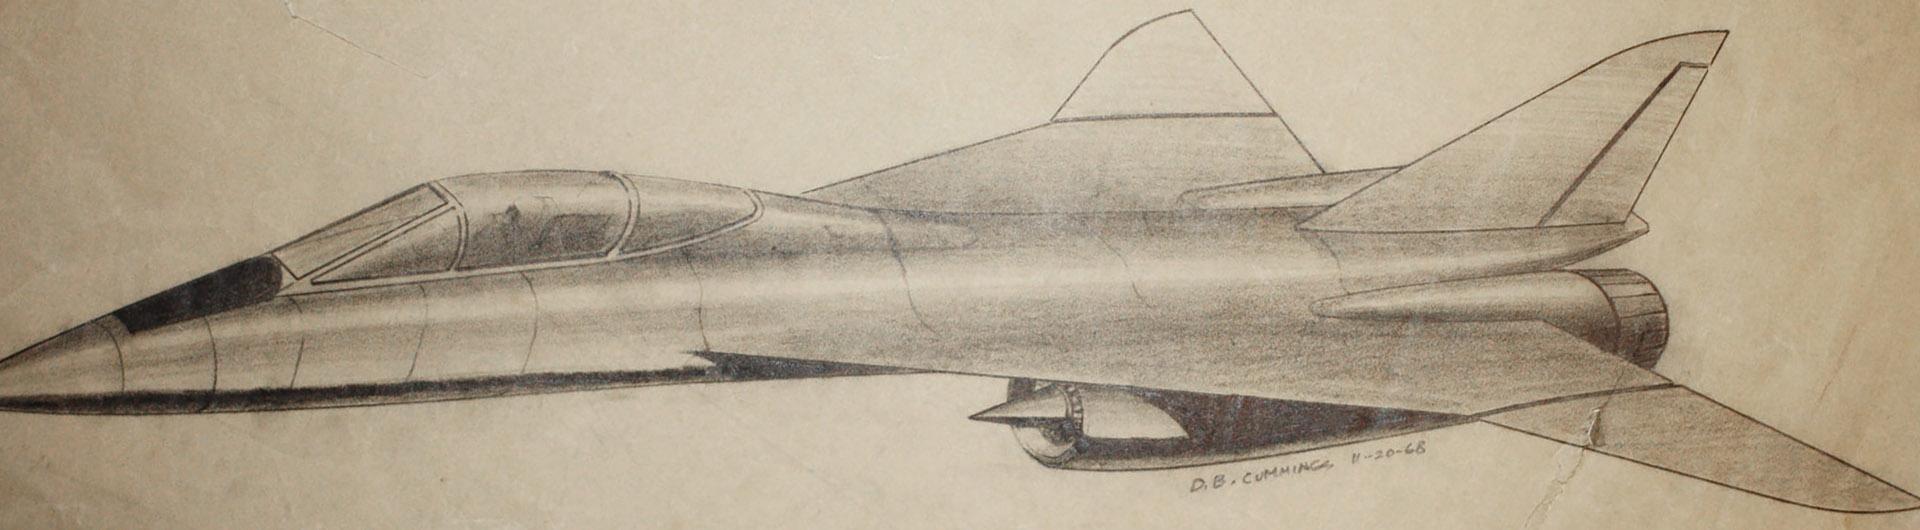 Sketch of fighter plane